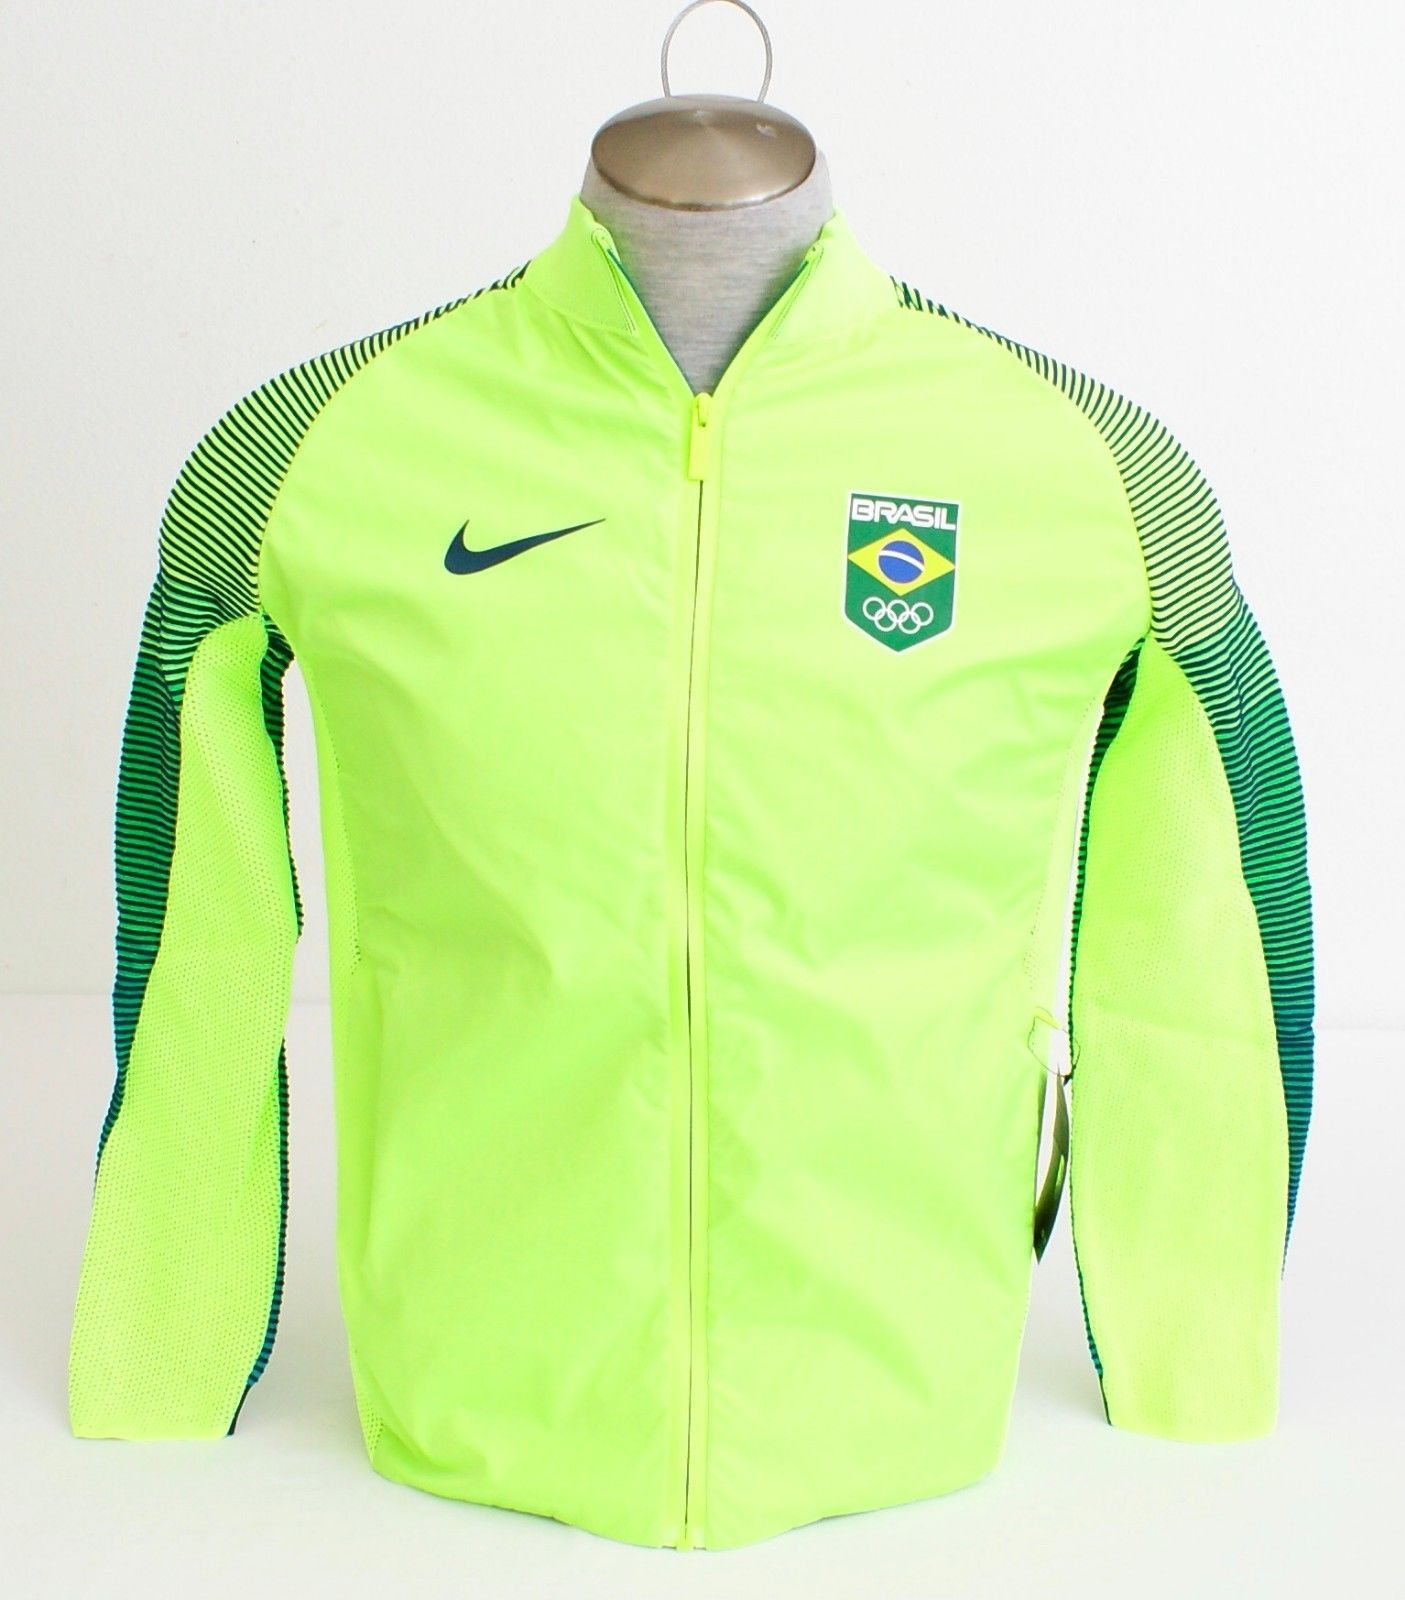 Nike NikeLab Volt Team Brazil Rio Olympics 2016 Jacket Made in Italy Men's M - $749.99